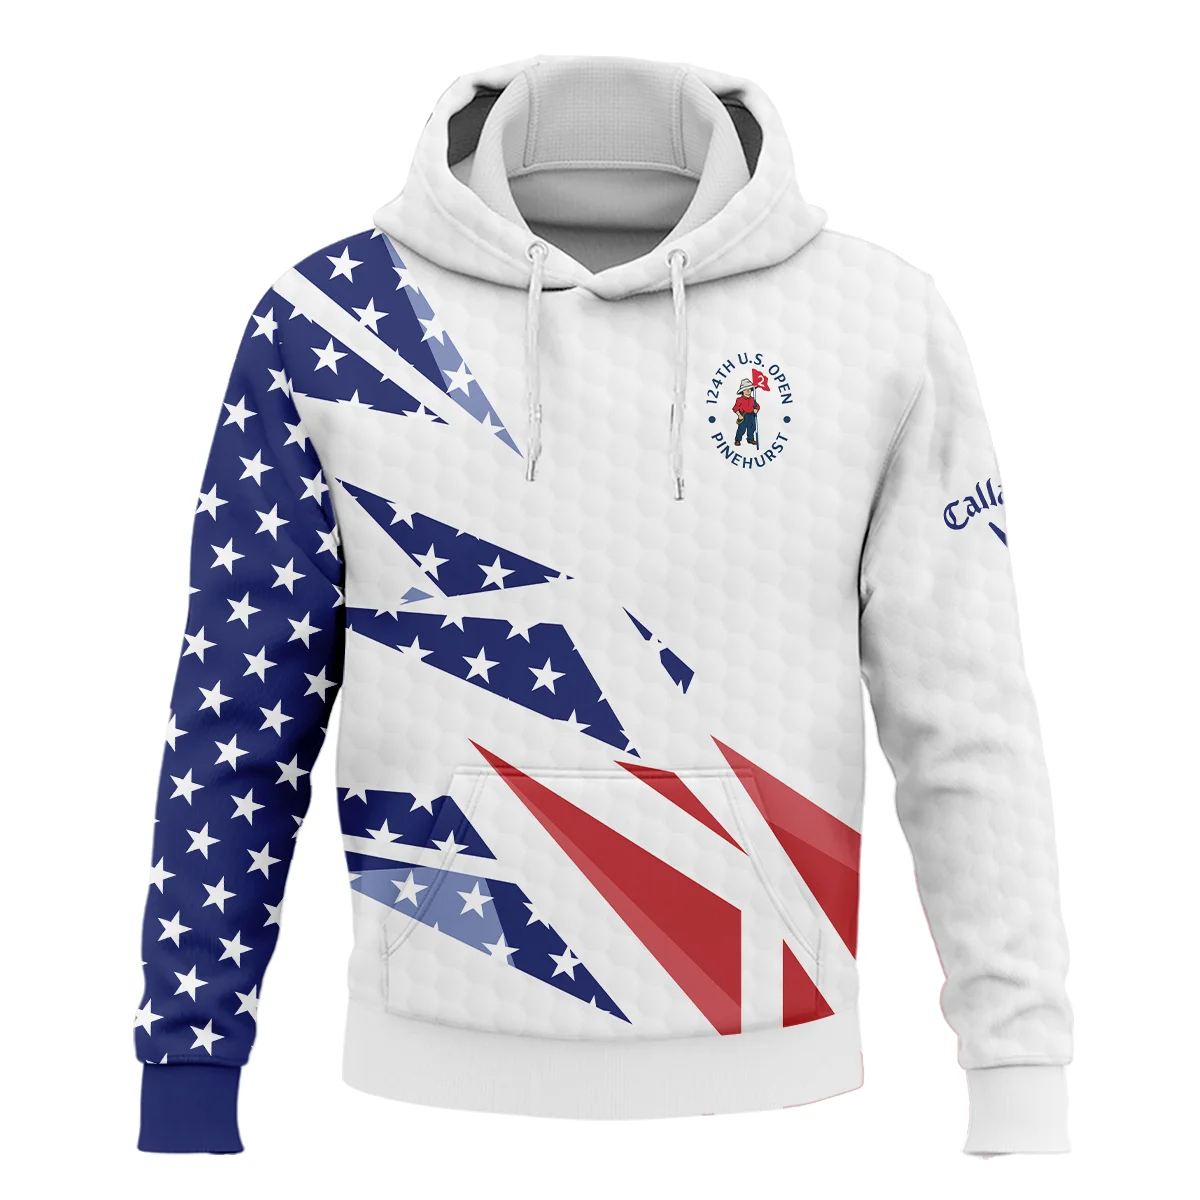 124th U.S. Open Pinehurst Callaway Unisex Sweatshirt Golf Pattern White USA Flag All Over Print Sweatshirt